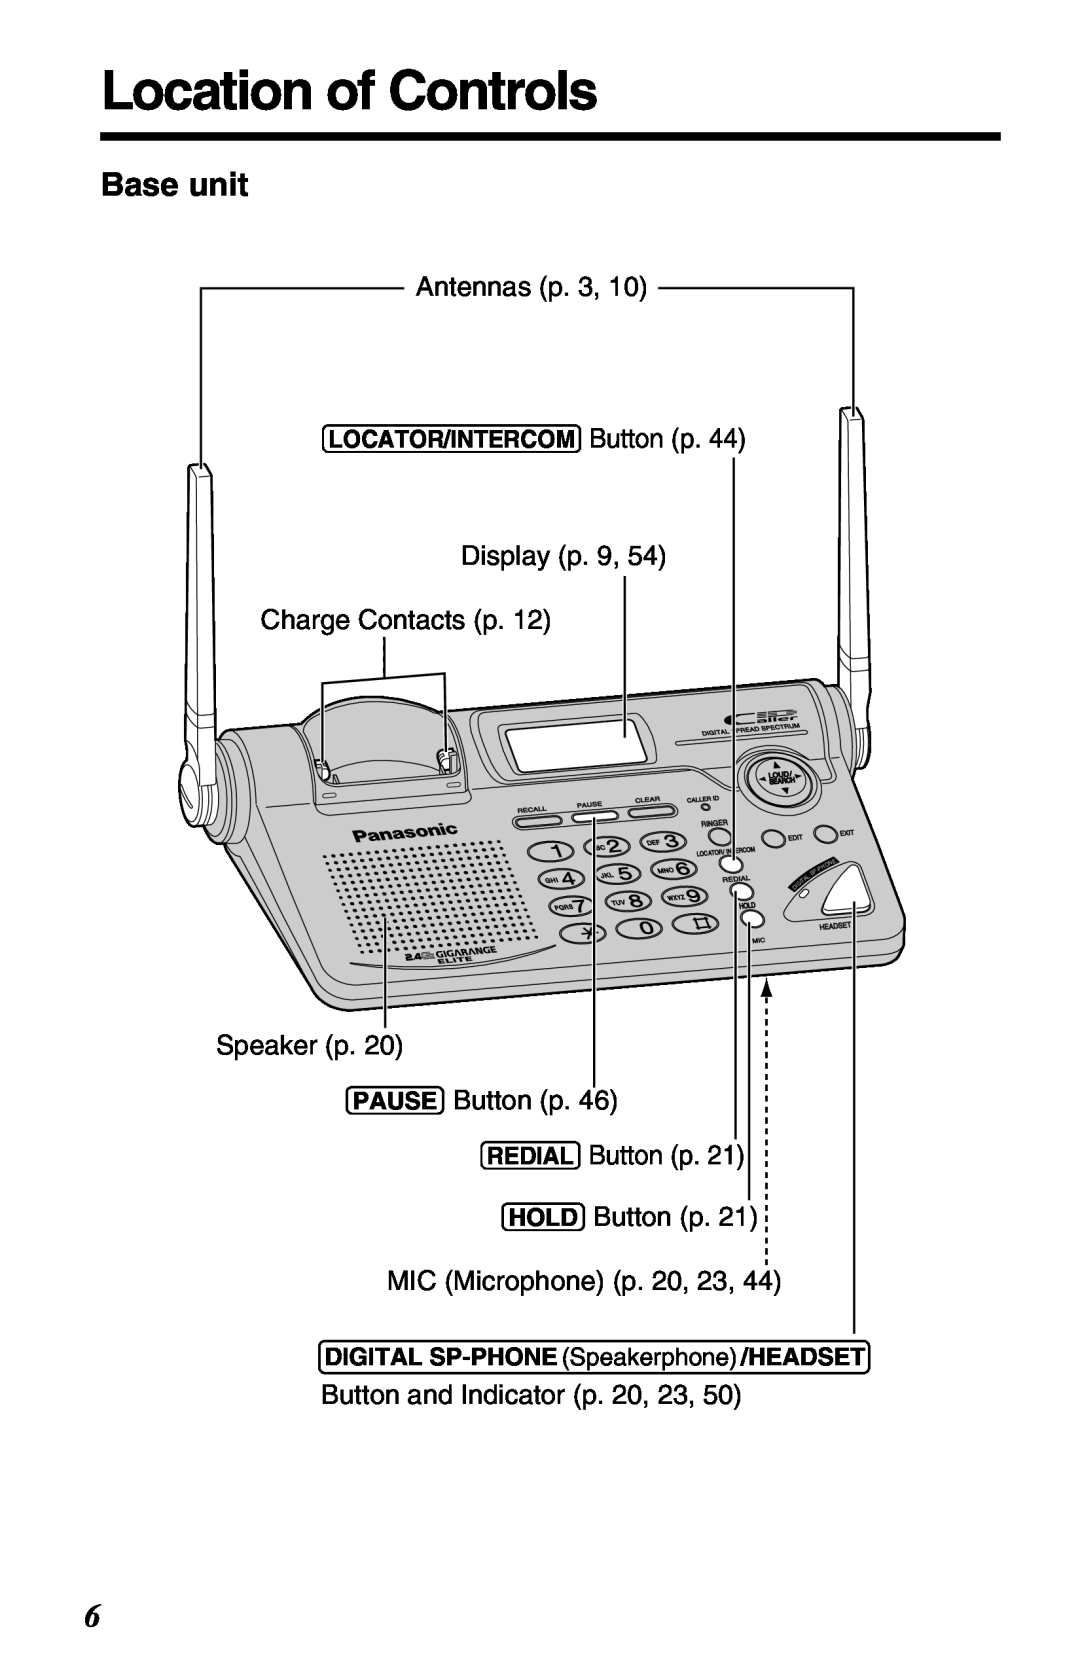 Panasonic KX-TG2650ALN Location of Controls, Base unit, LOCATOR/INTERCOM Button p, DIGITAL SP-PHONE Speakerphone /HEADSET 